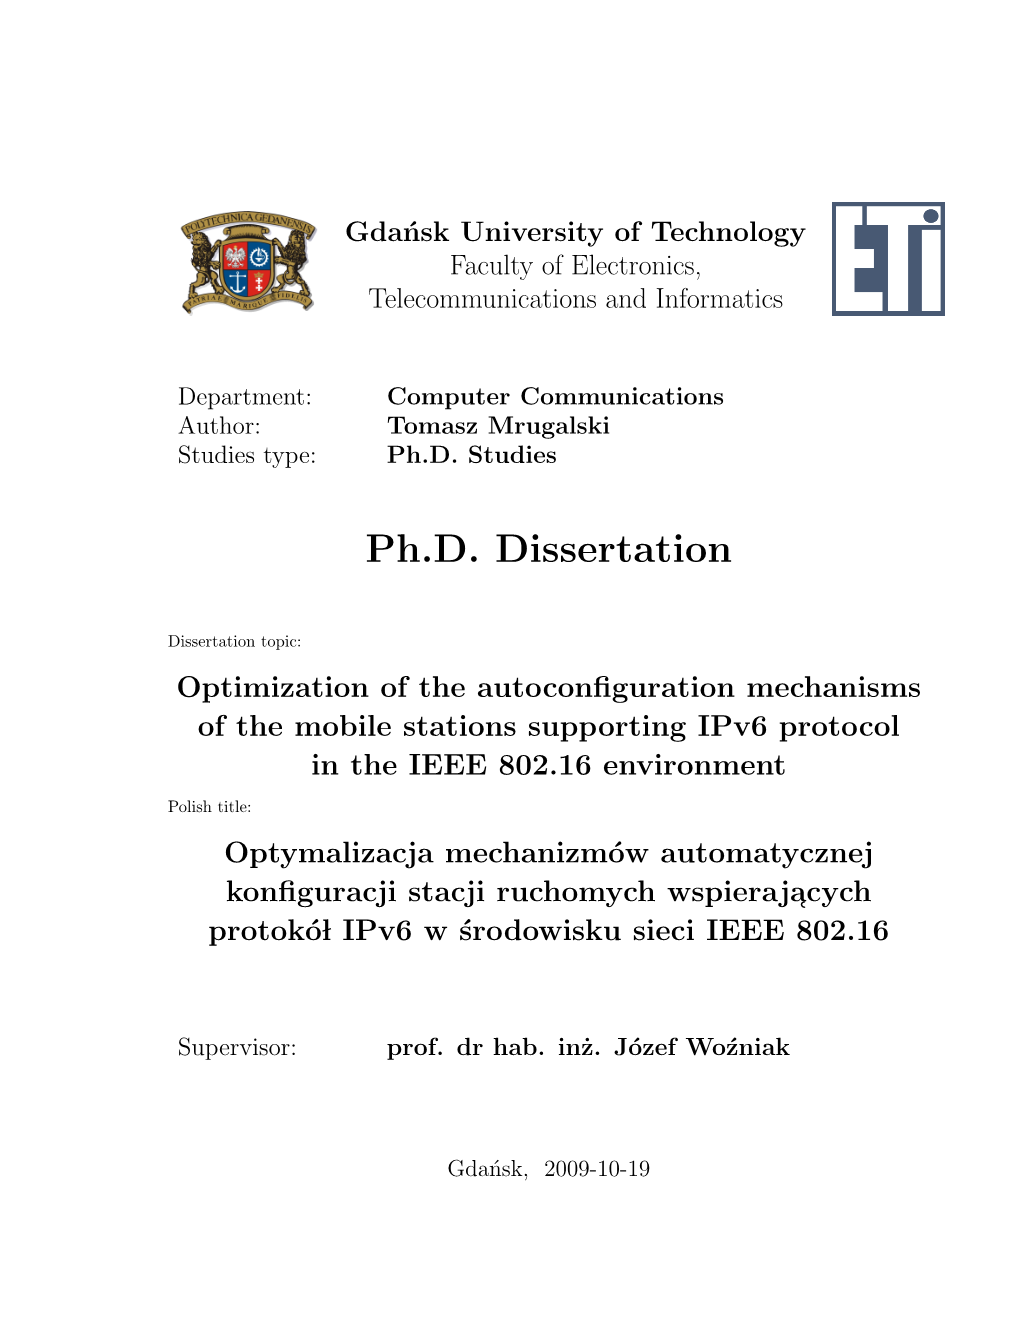 Ph.D. Dissertation